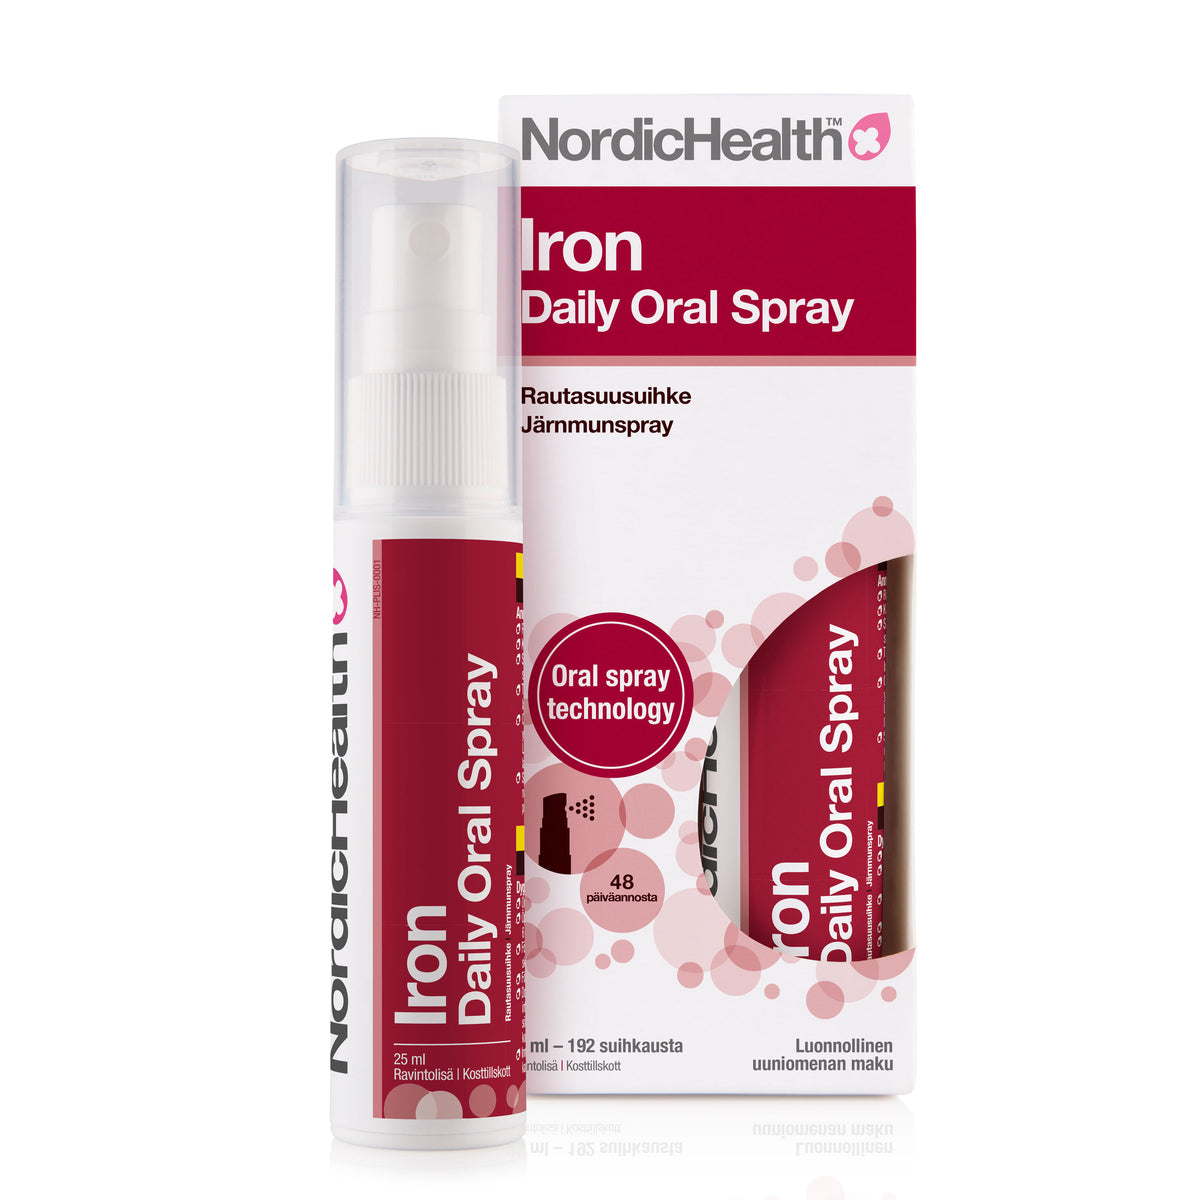 Nordic Health Iron Daily Oral Spray - Rautasuusuihke 25 ml - Päiväys 02/2024